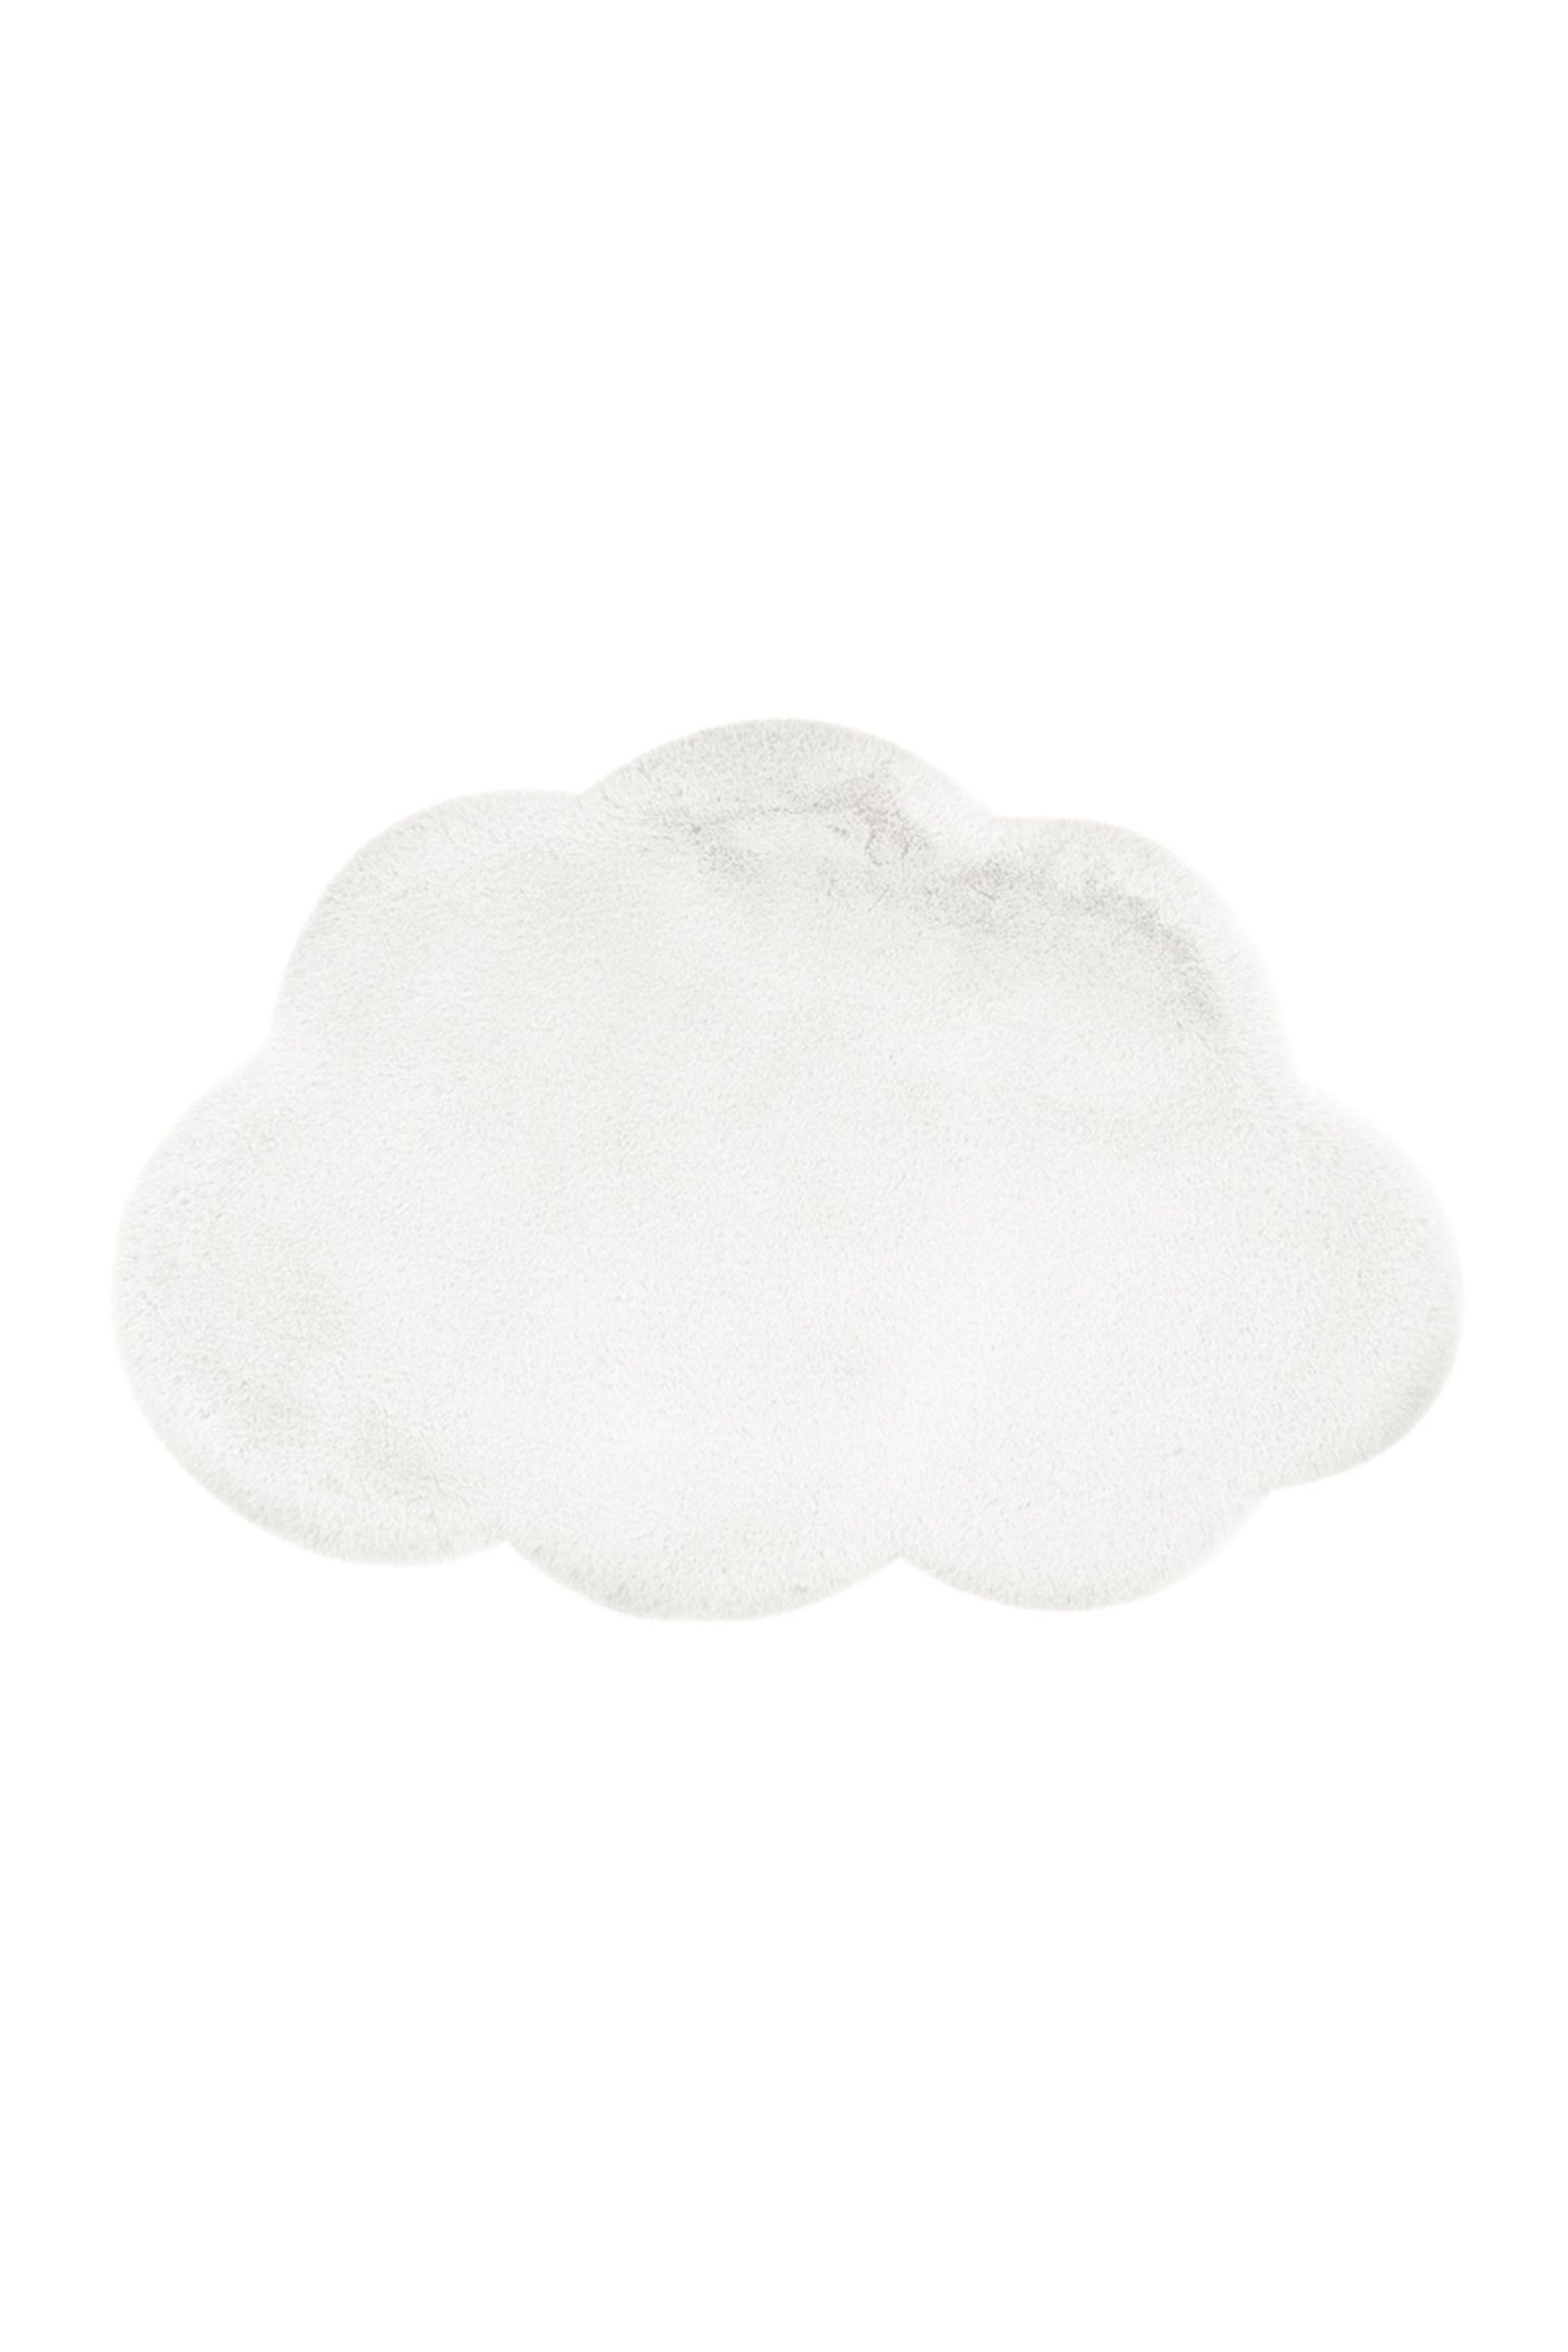 Teppich Lovely Kids 1425-Cloud Weiß 60 cm x 90 cm